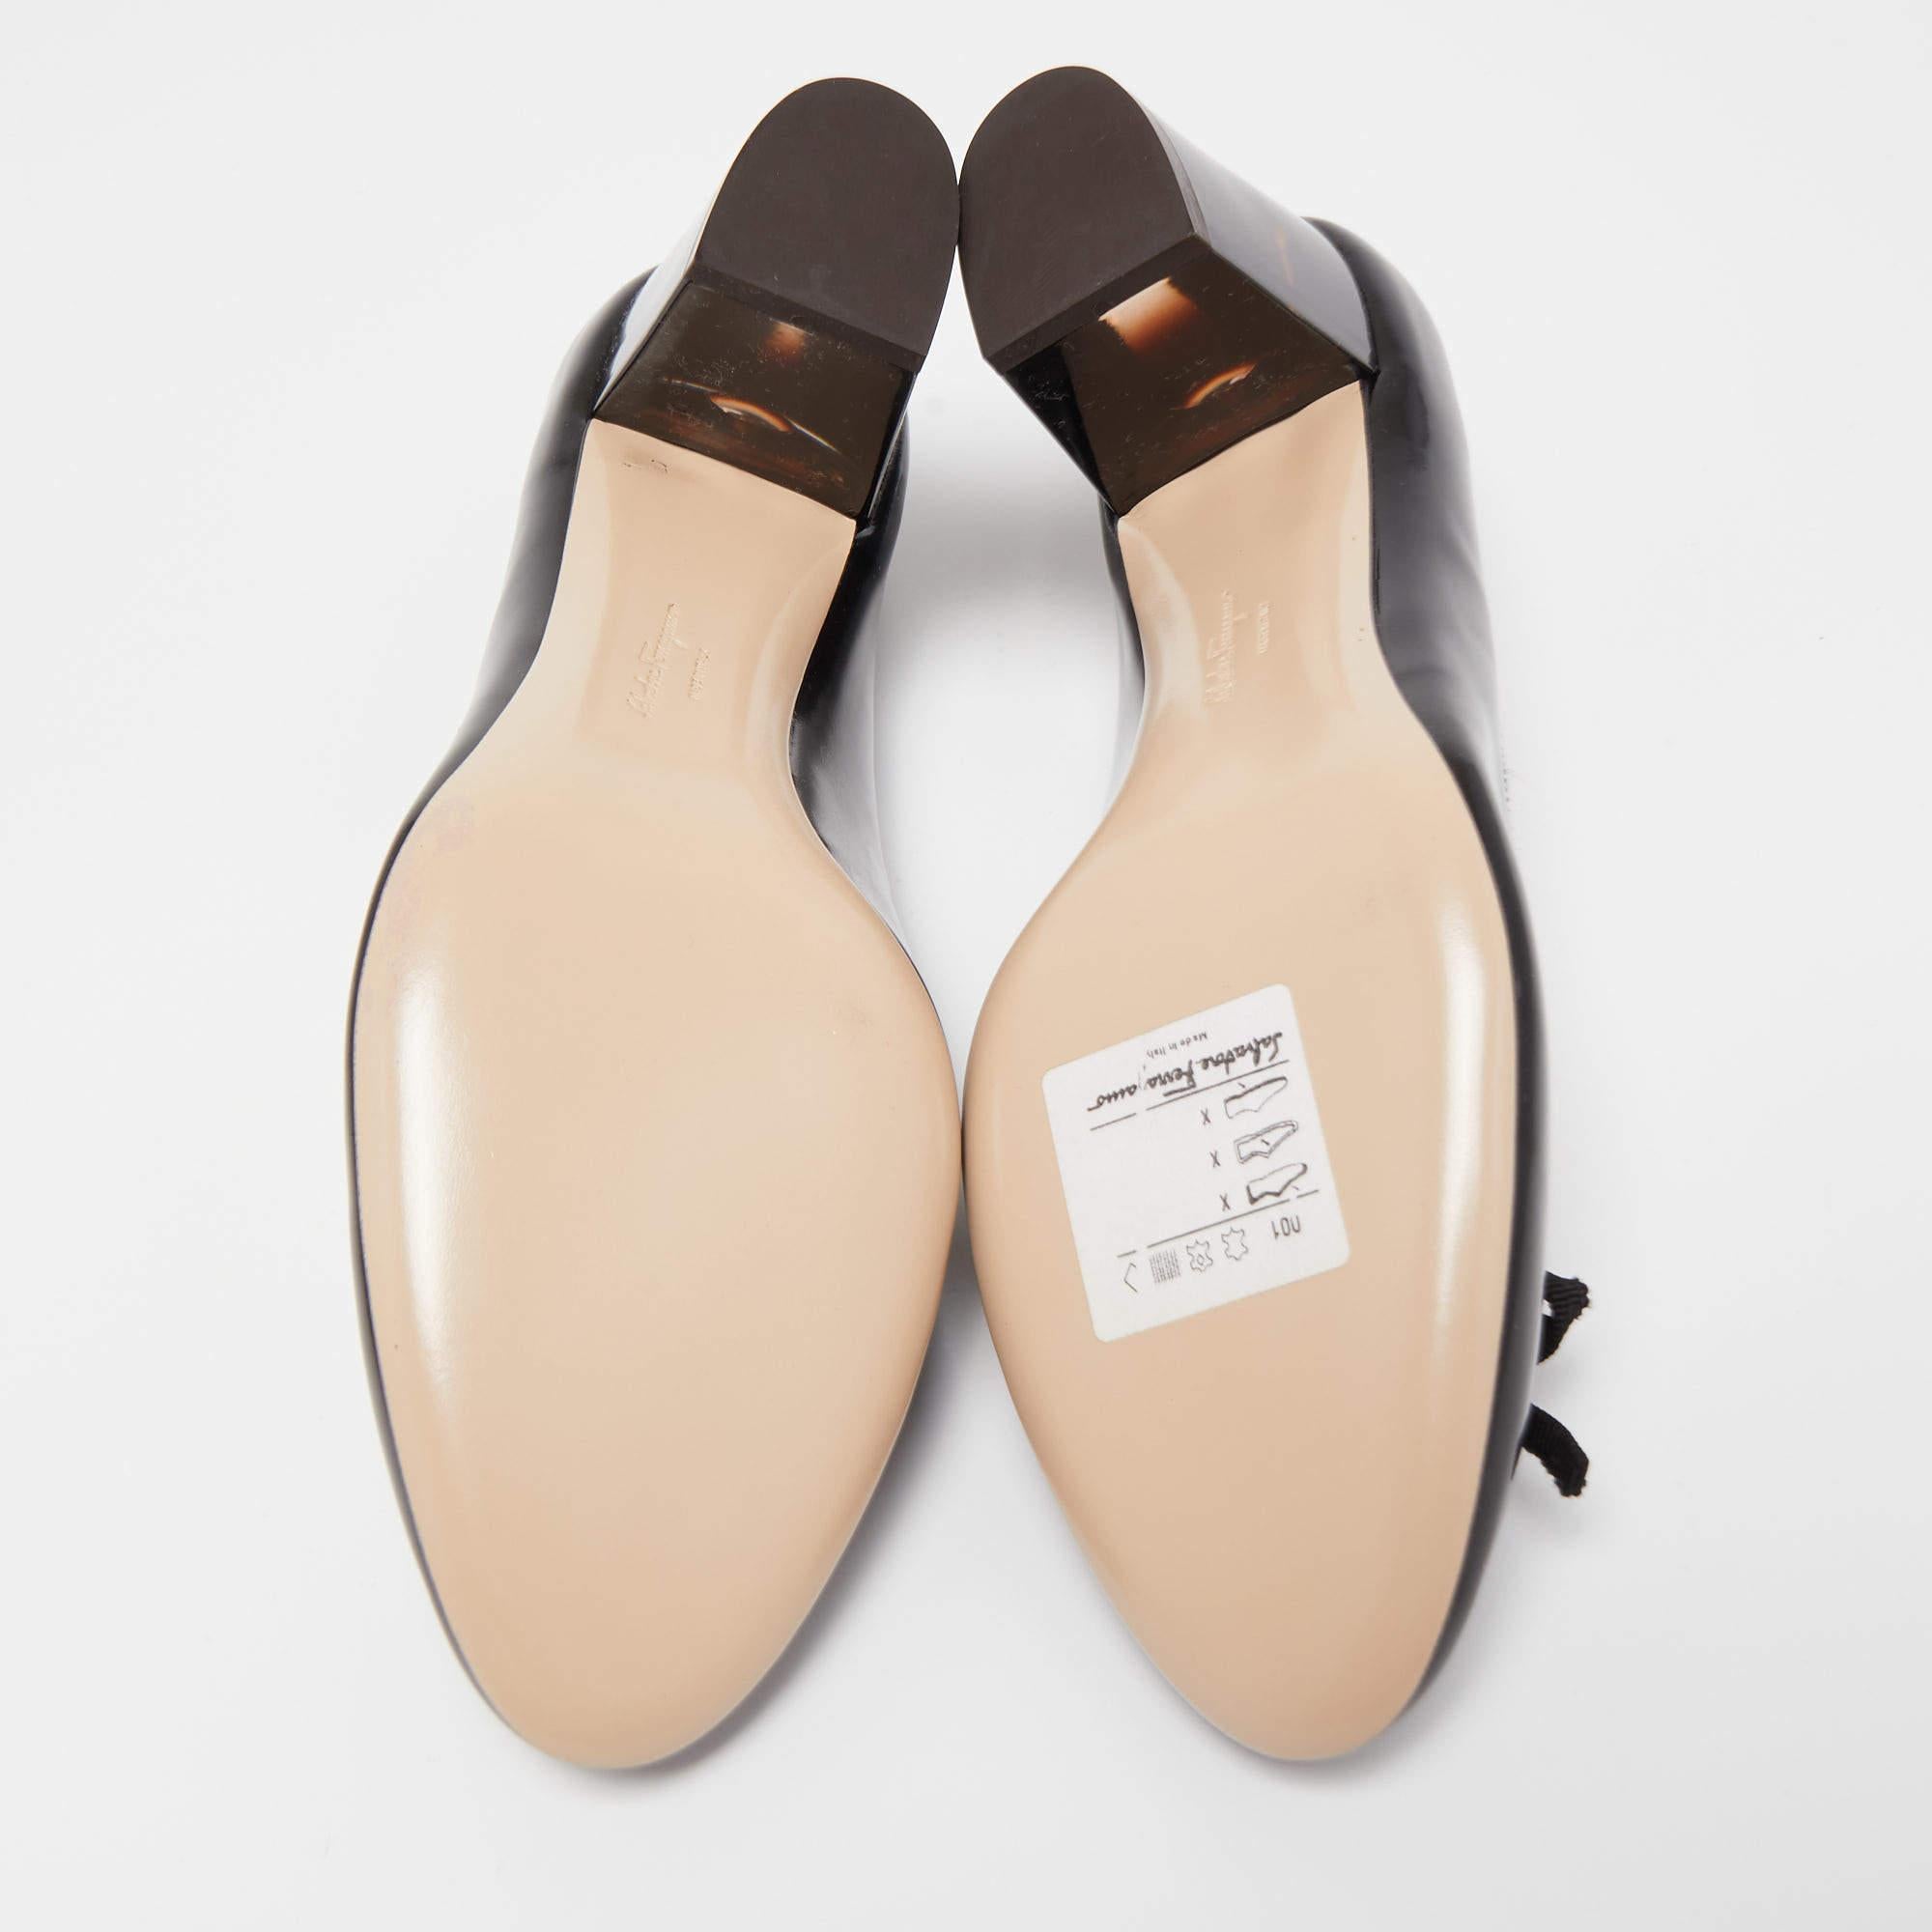 Salvatore Ferragamo Black Patent Leather Block Heel Pumps Size 41.5 1